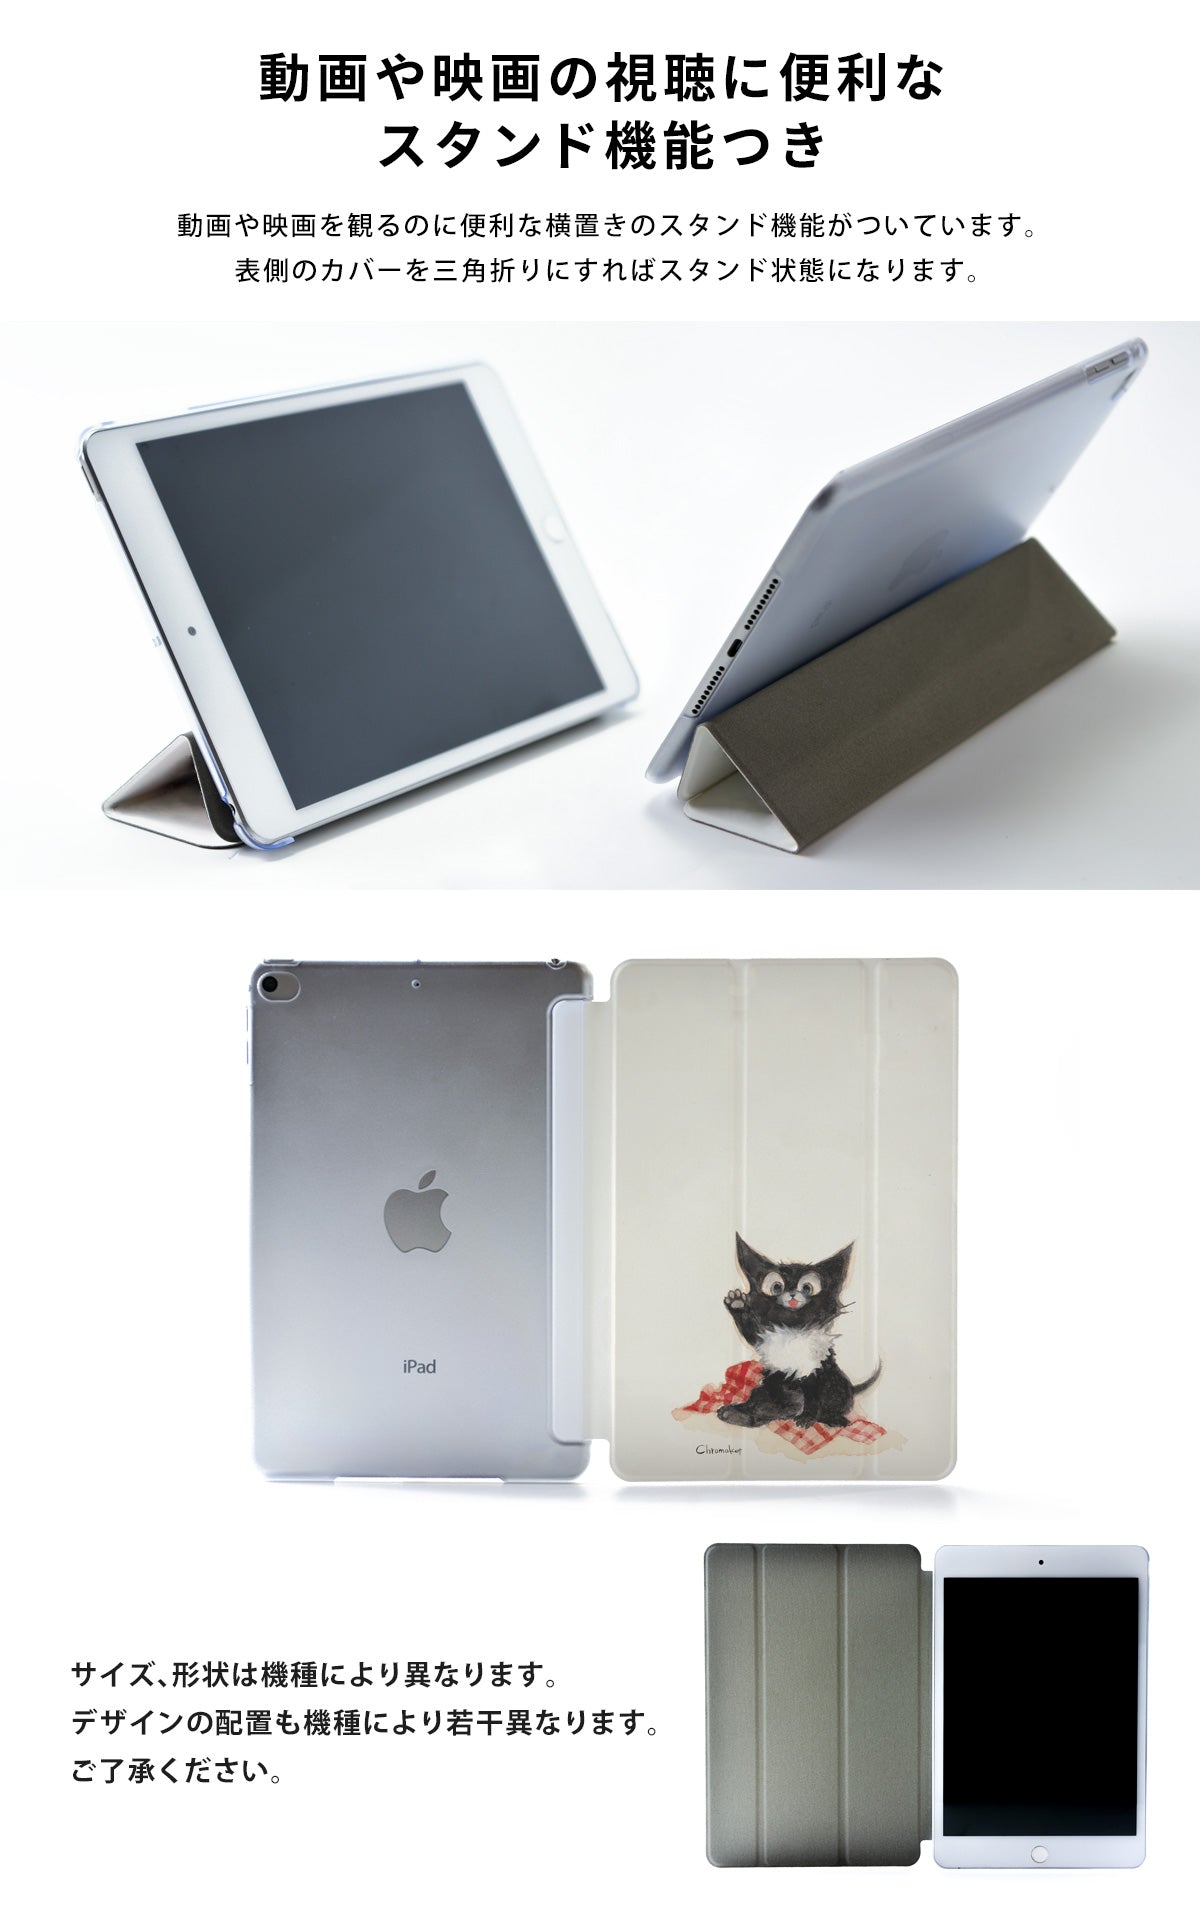 iPadケースはスタンド機能付。ほとんどのiPadに対応。